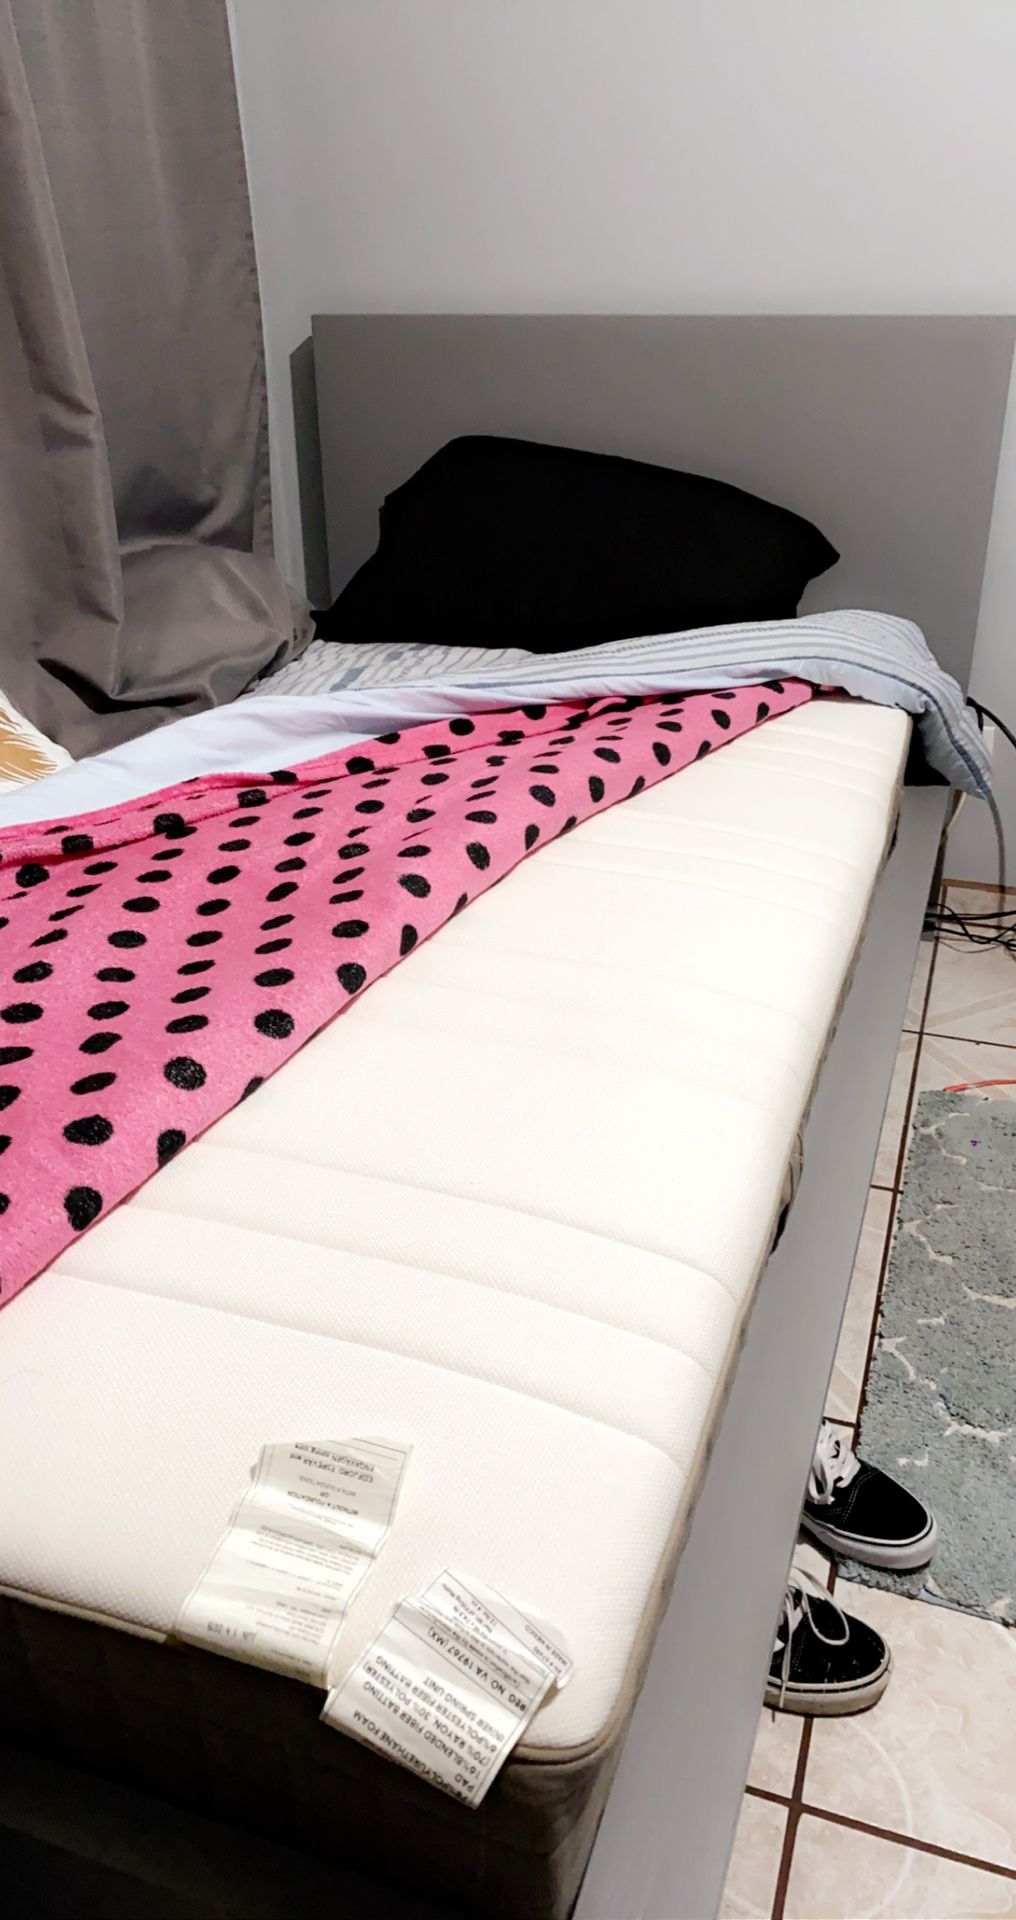 Ikea twin bed